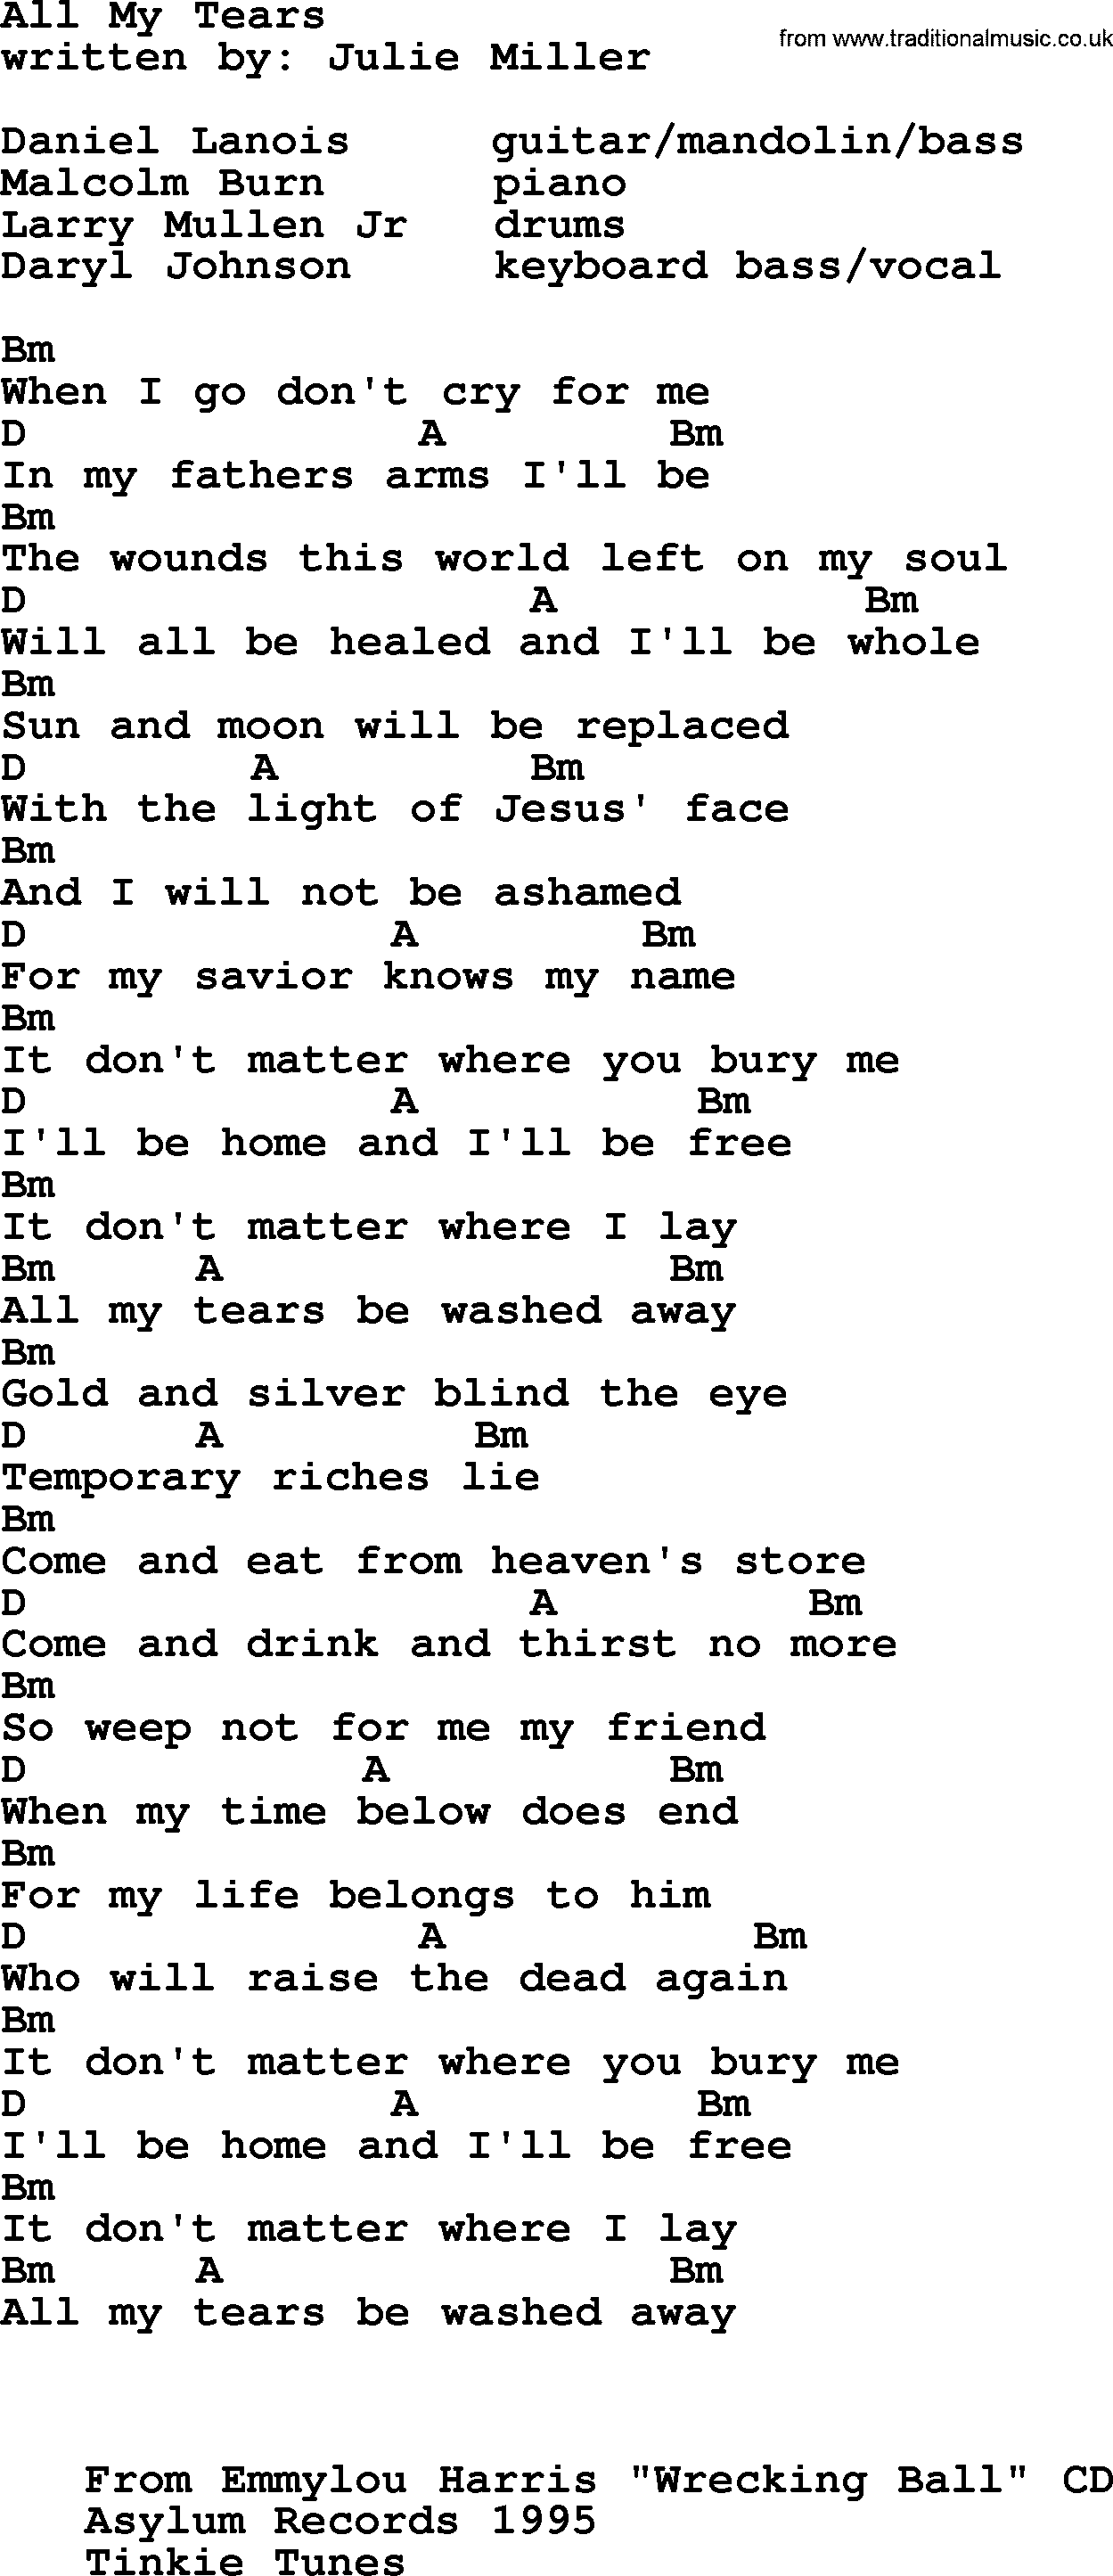 Emmylou Harris song: All My Tears lyrics and chords